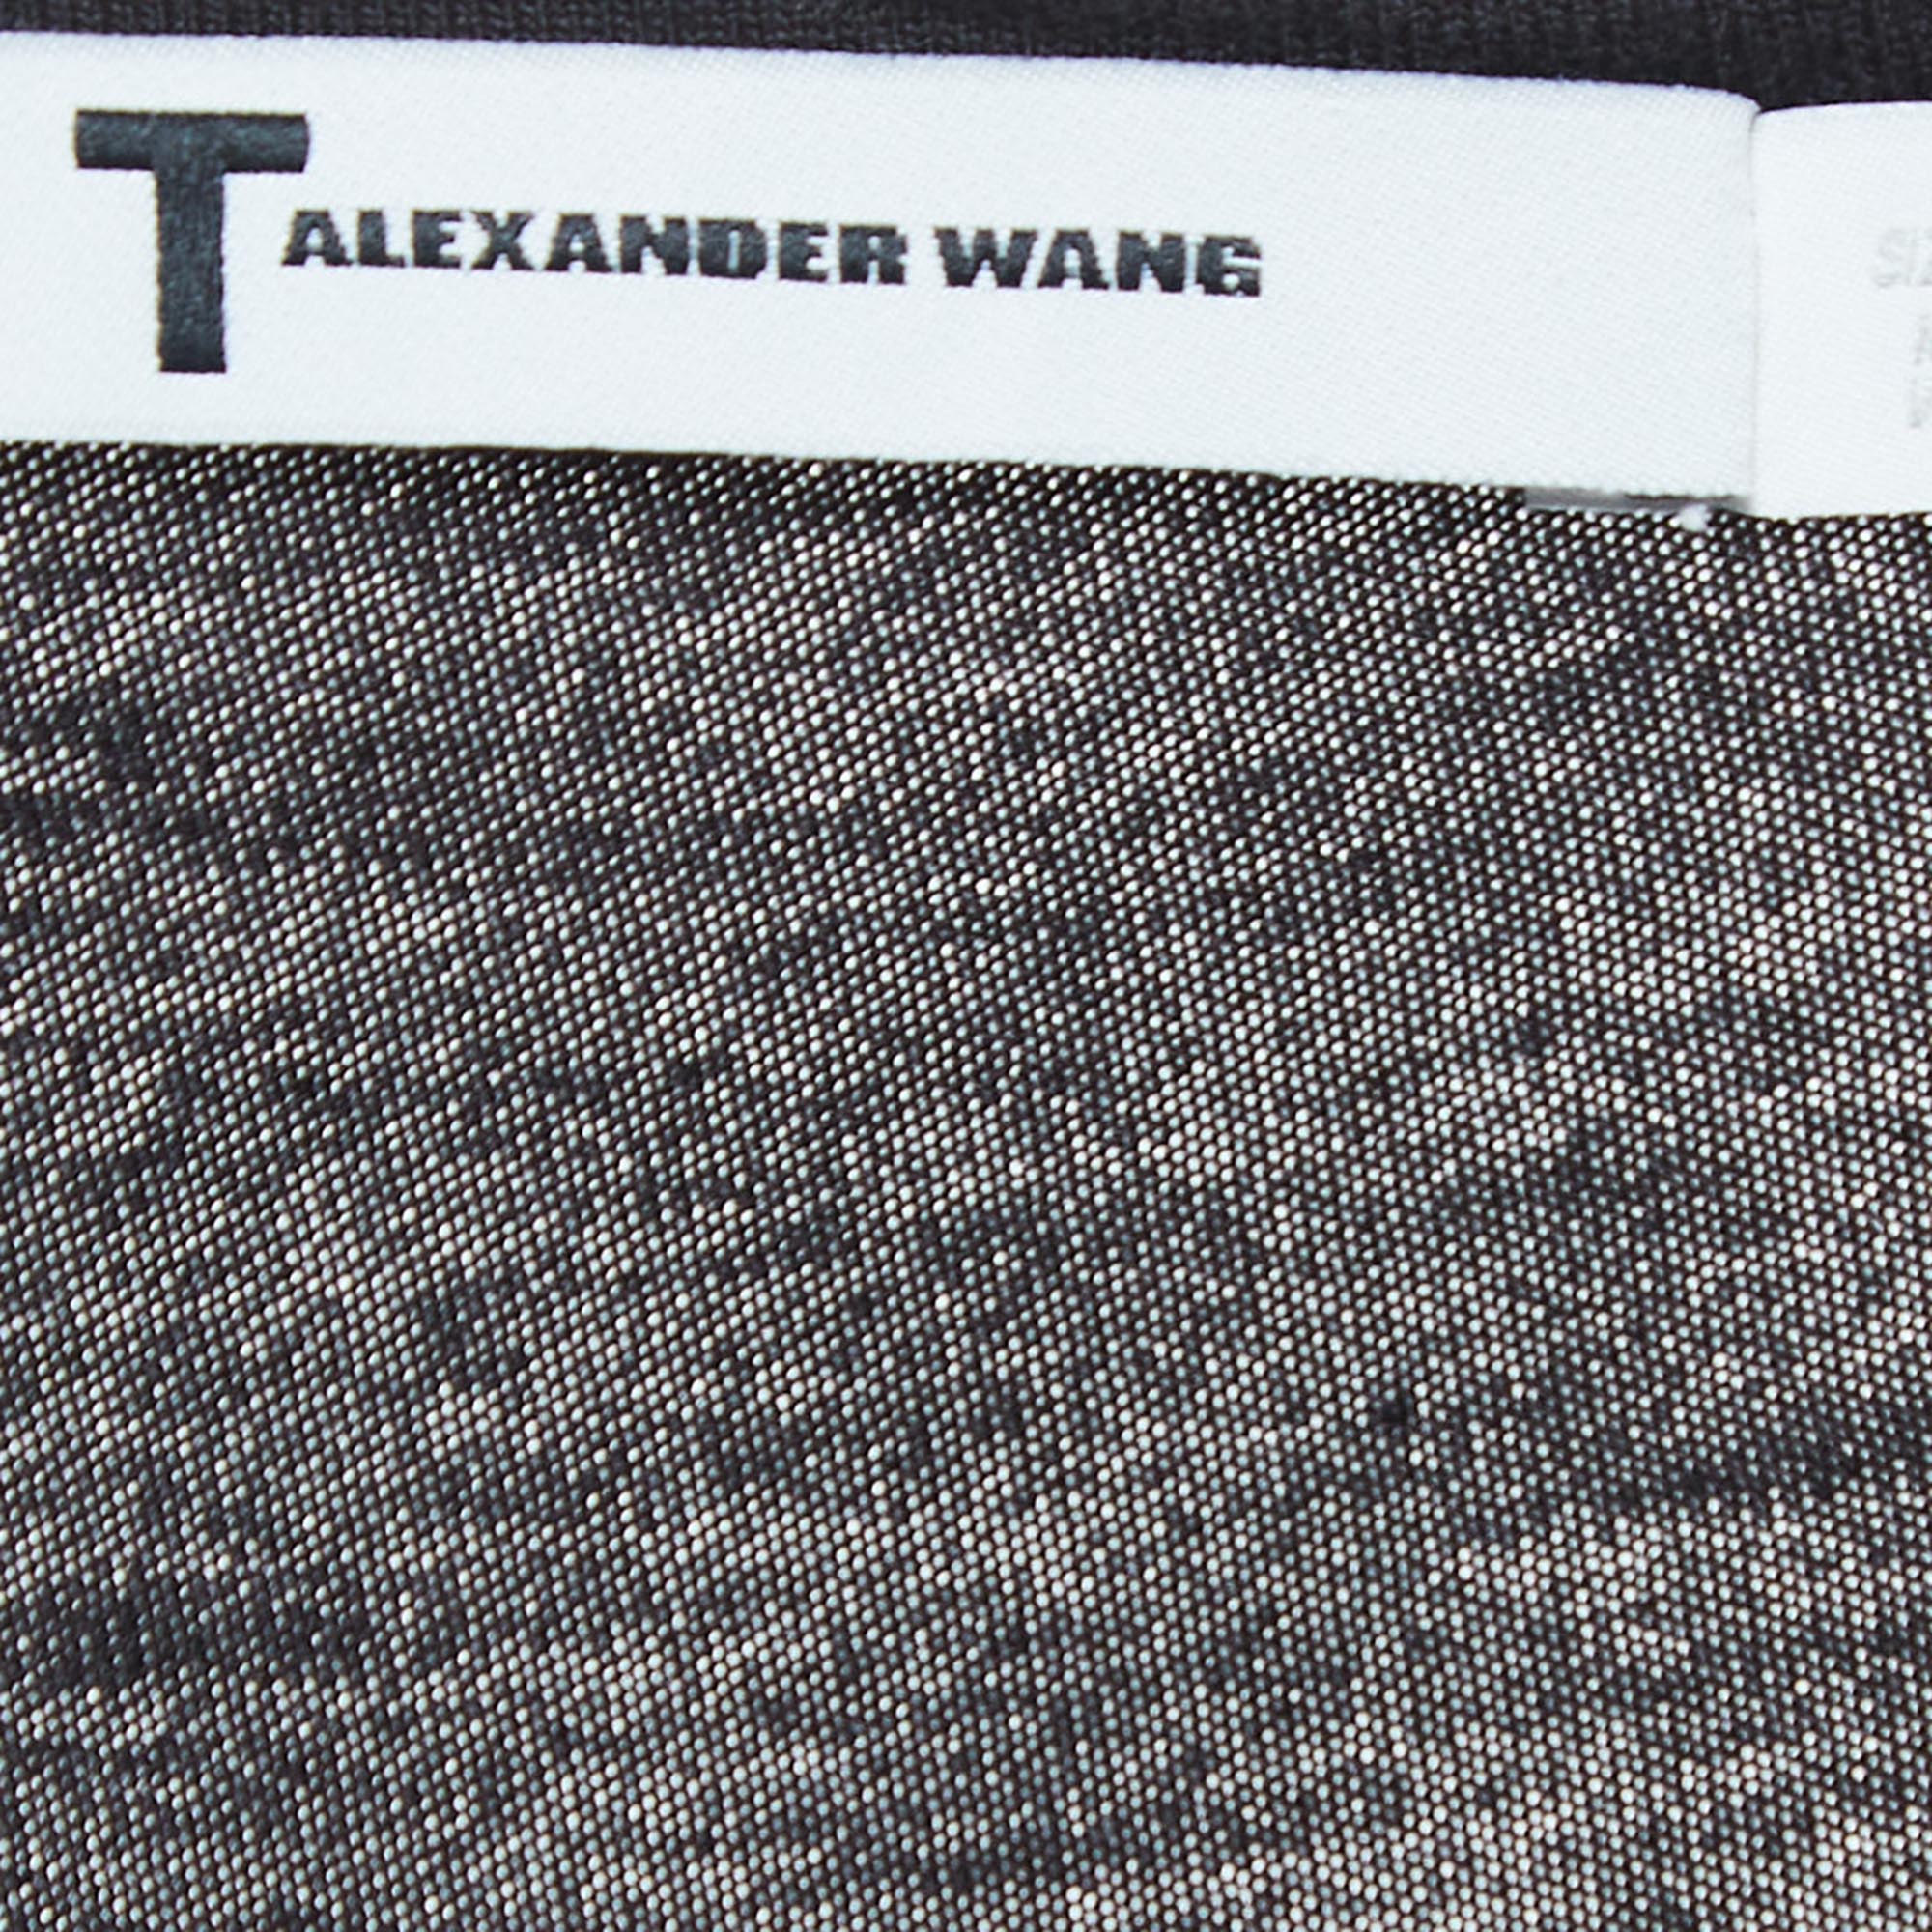 Alexander Wang Black Knit Pocket Detail Tank Top L